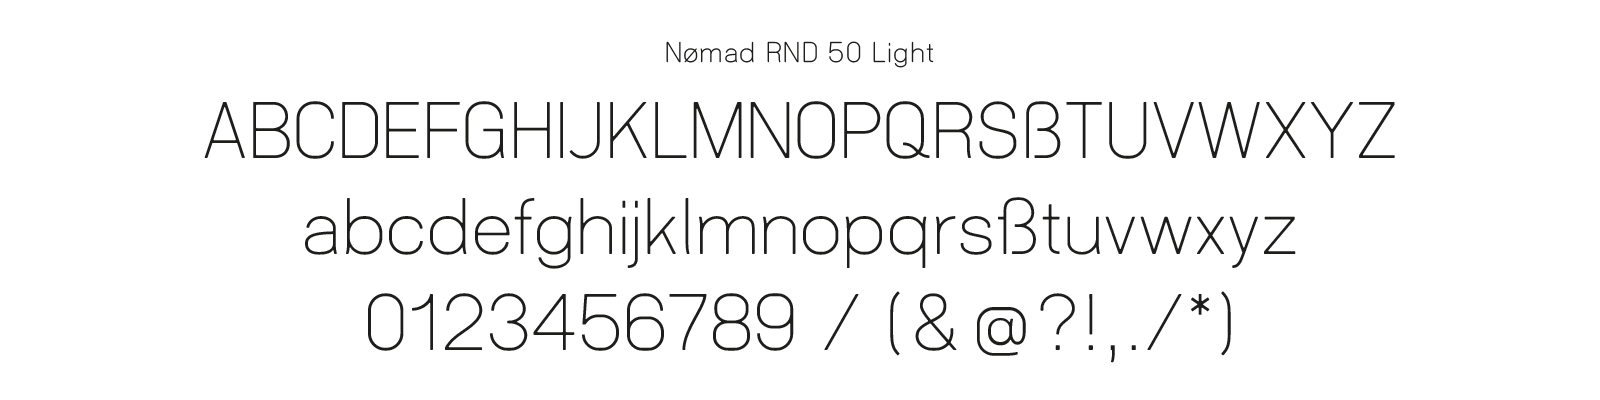 Nomad RND 50 Light